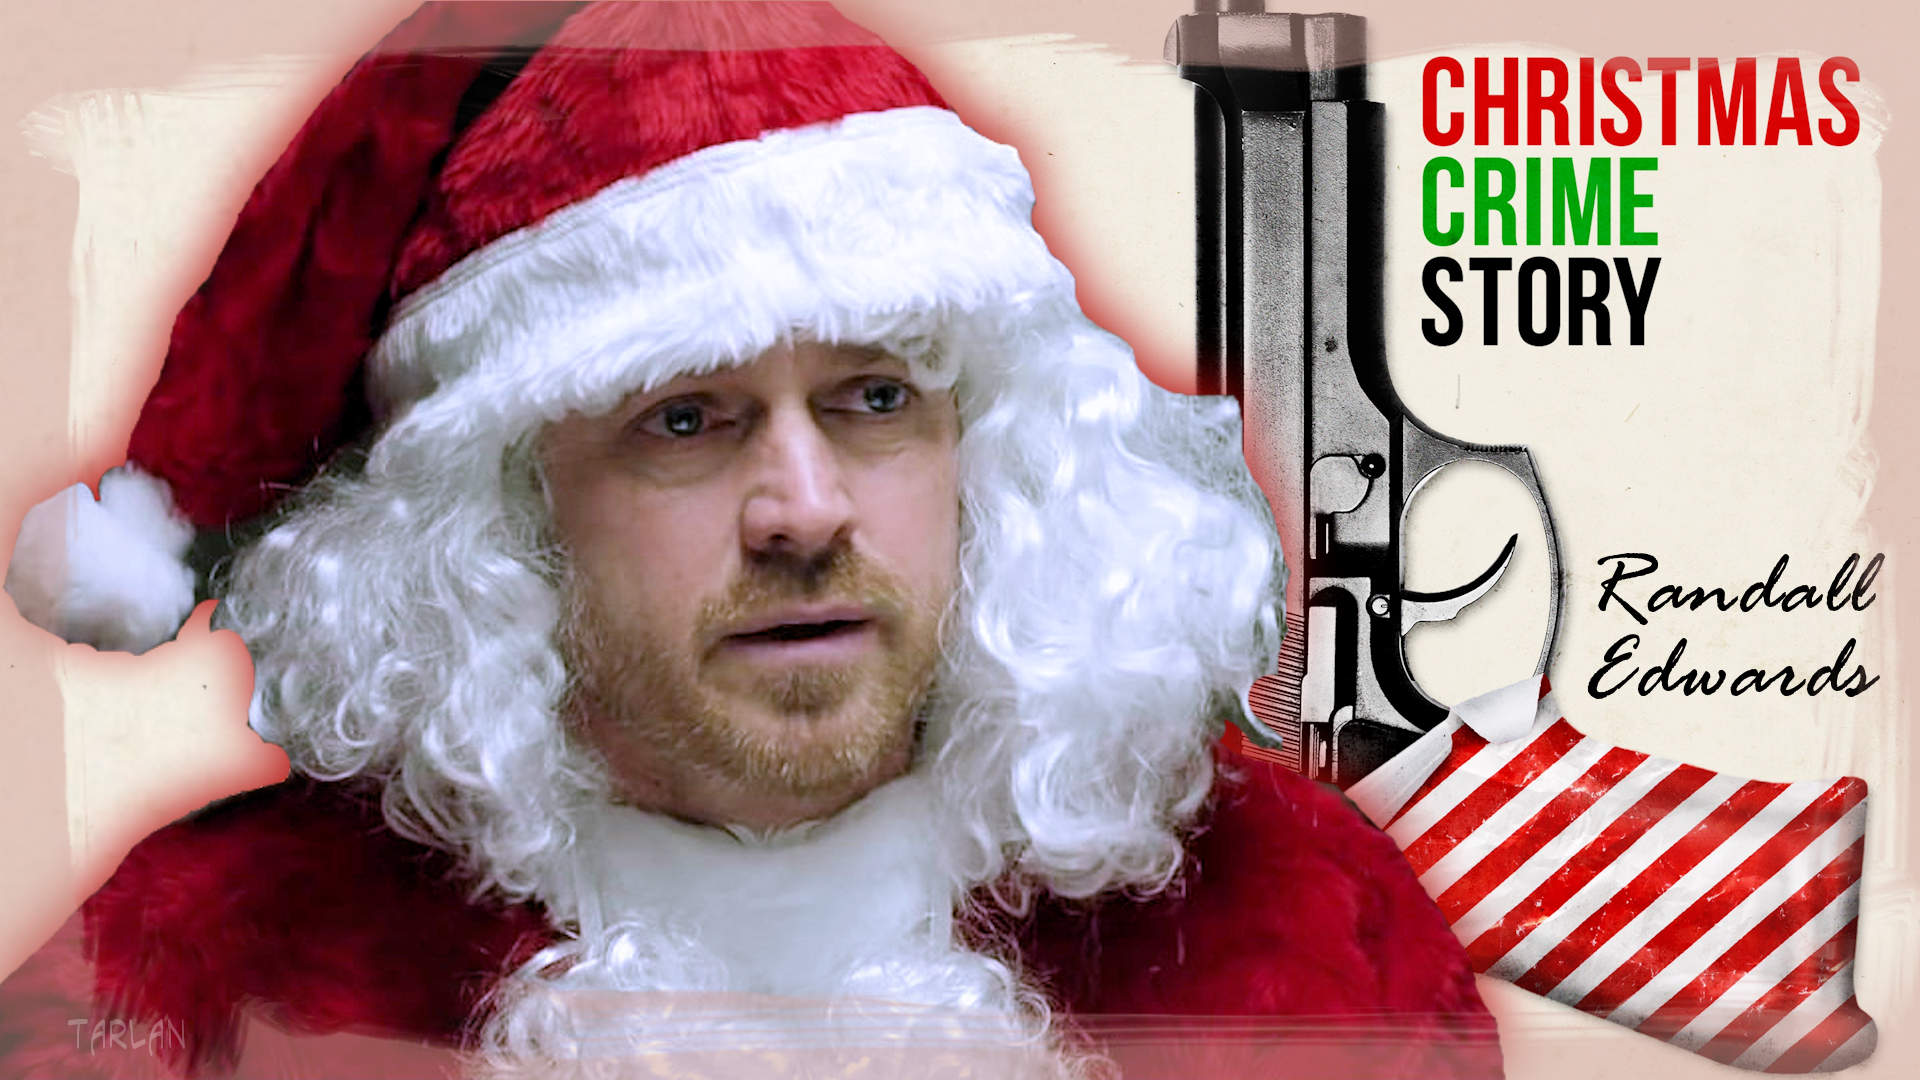 Christmas Crime Story - Wallpaper by Tarlan
Keywords: christmas_crime_art;christmas_crime_wpr